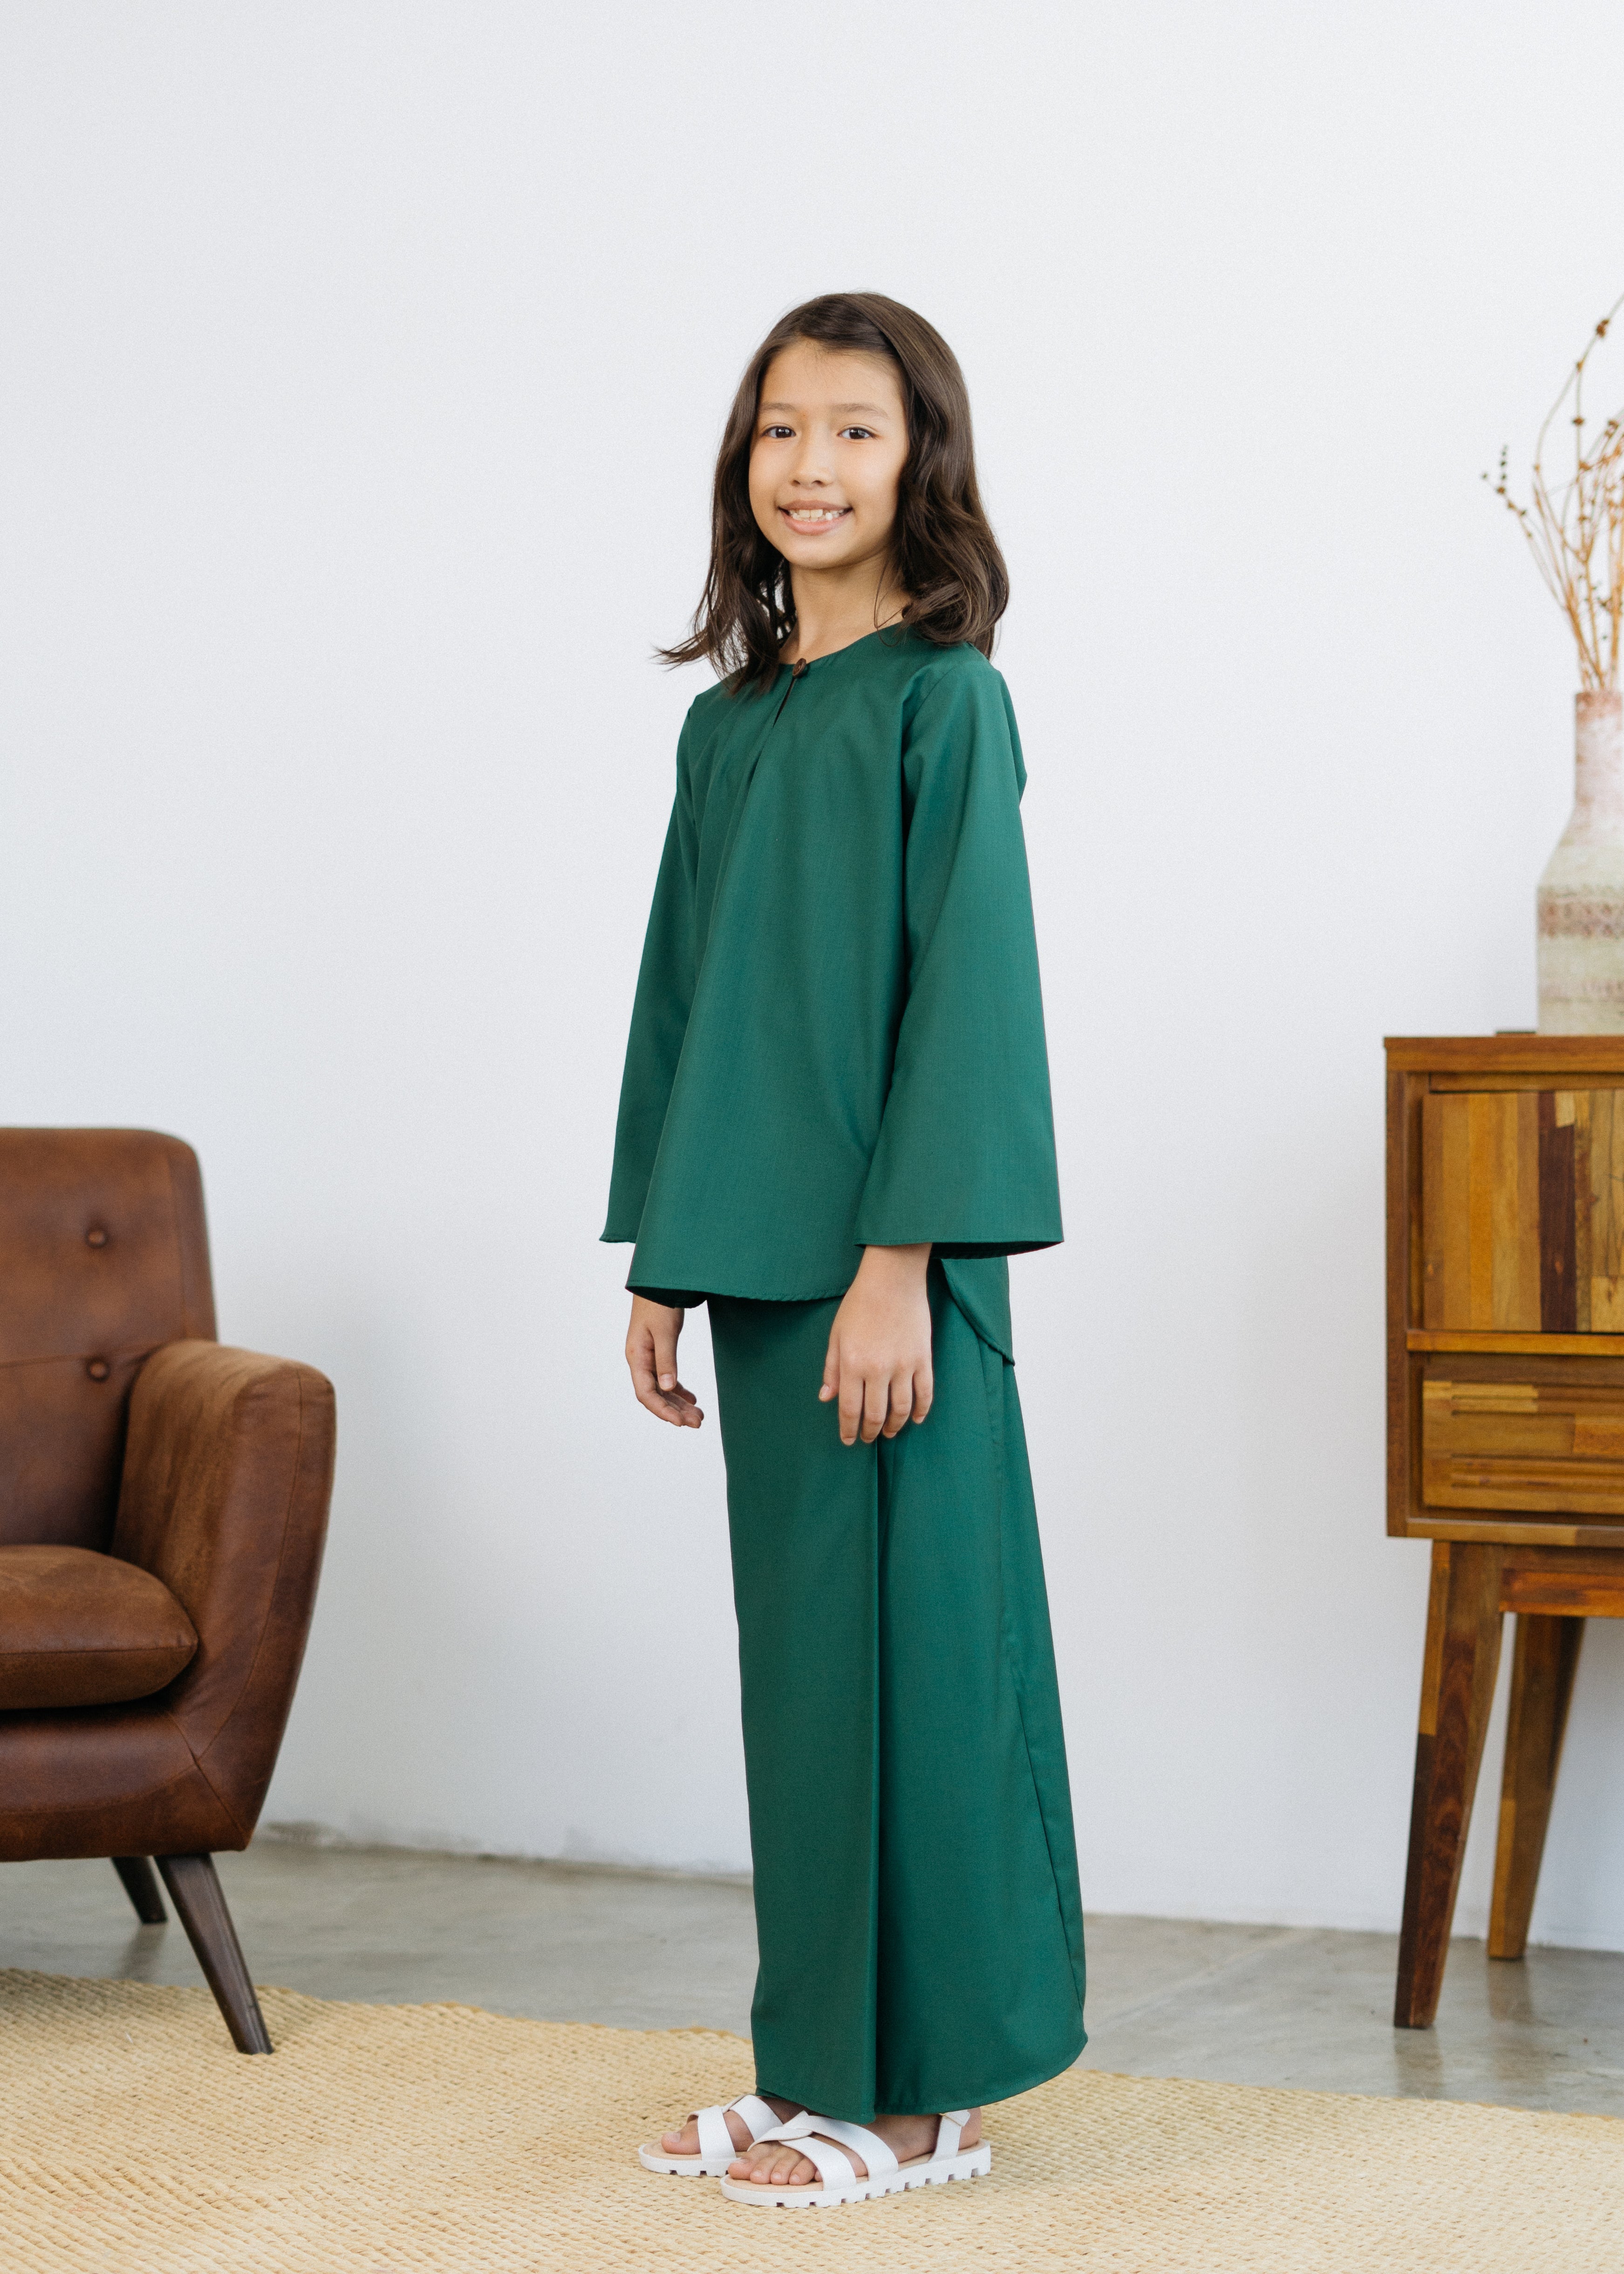 Patawali Girls Baju Kurung - Emerald Green